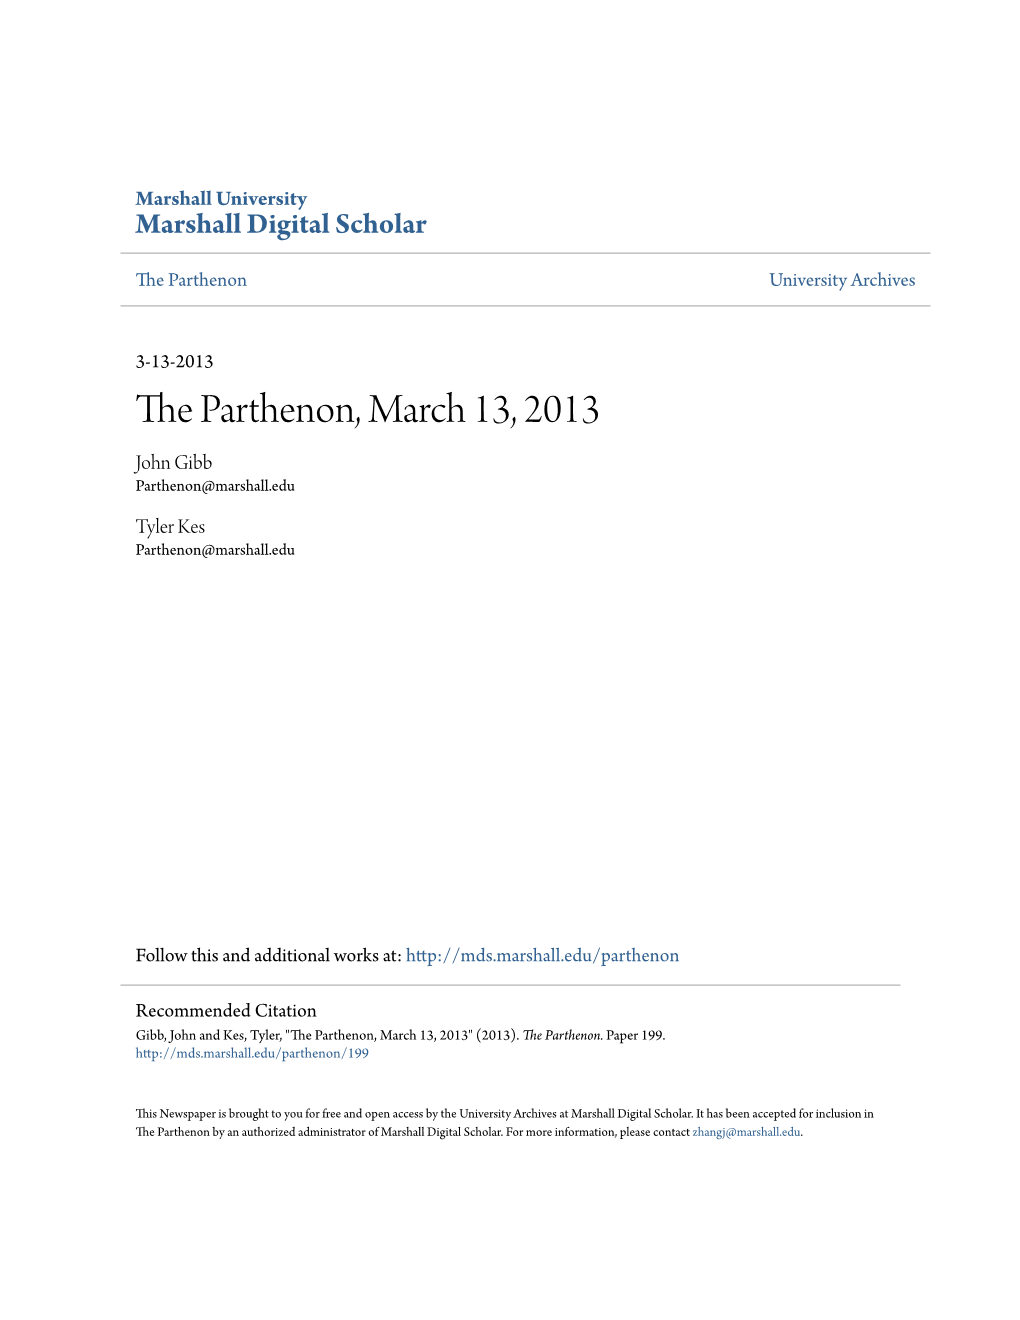 The Parthenon, March 13, 2013